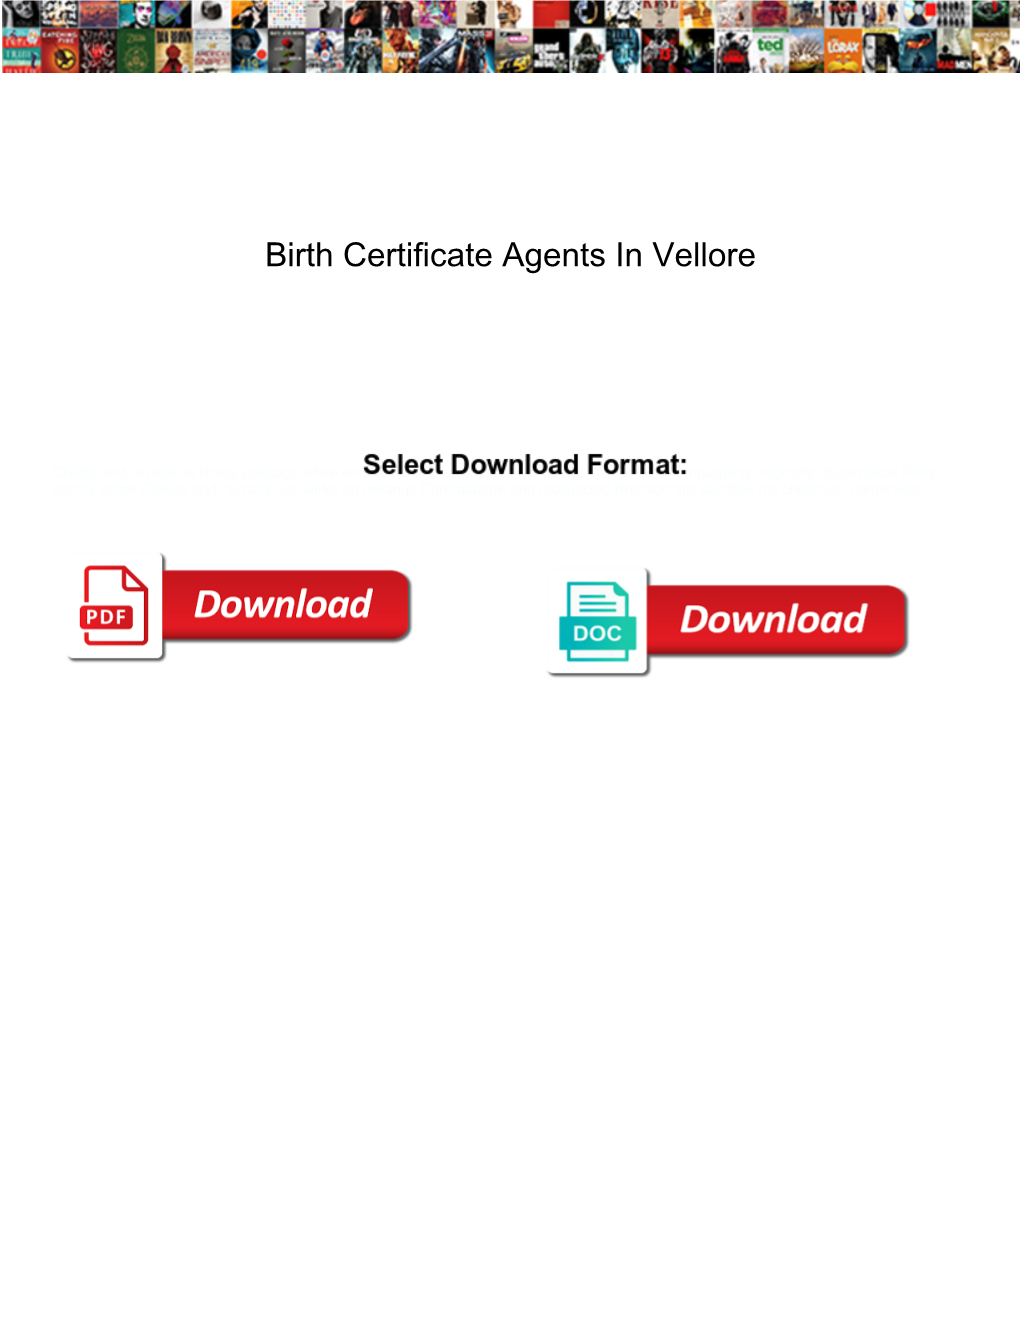 Birth Certificate Agents in Vellore